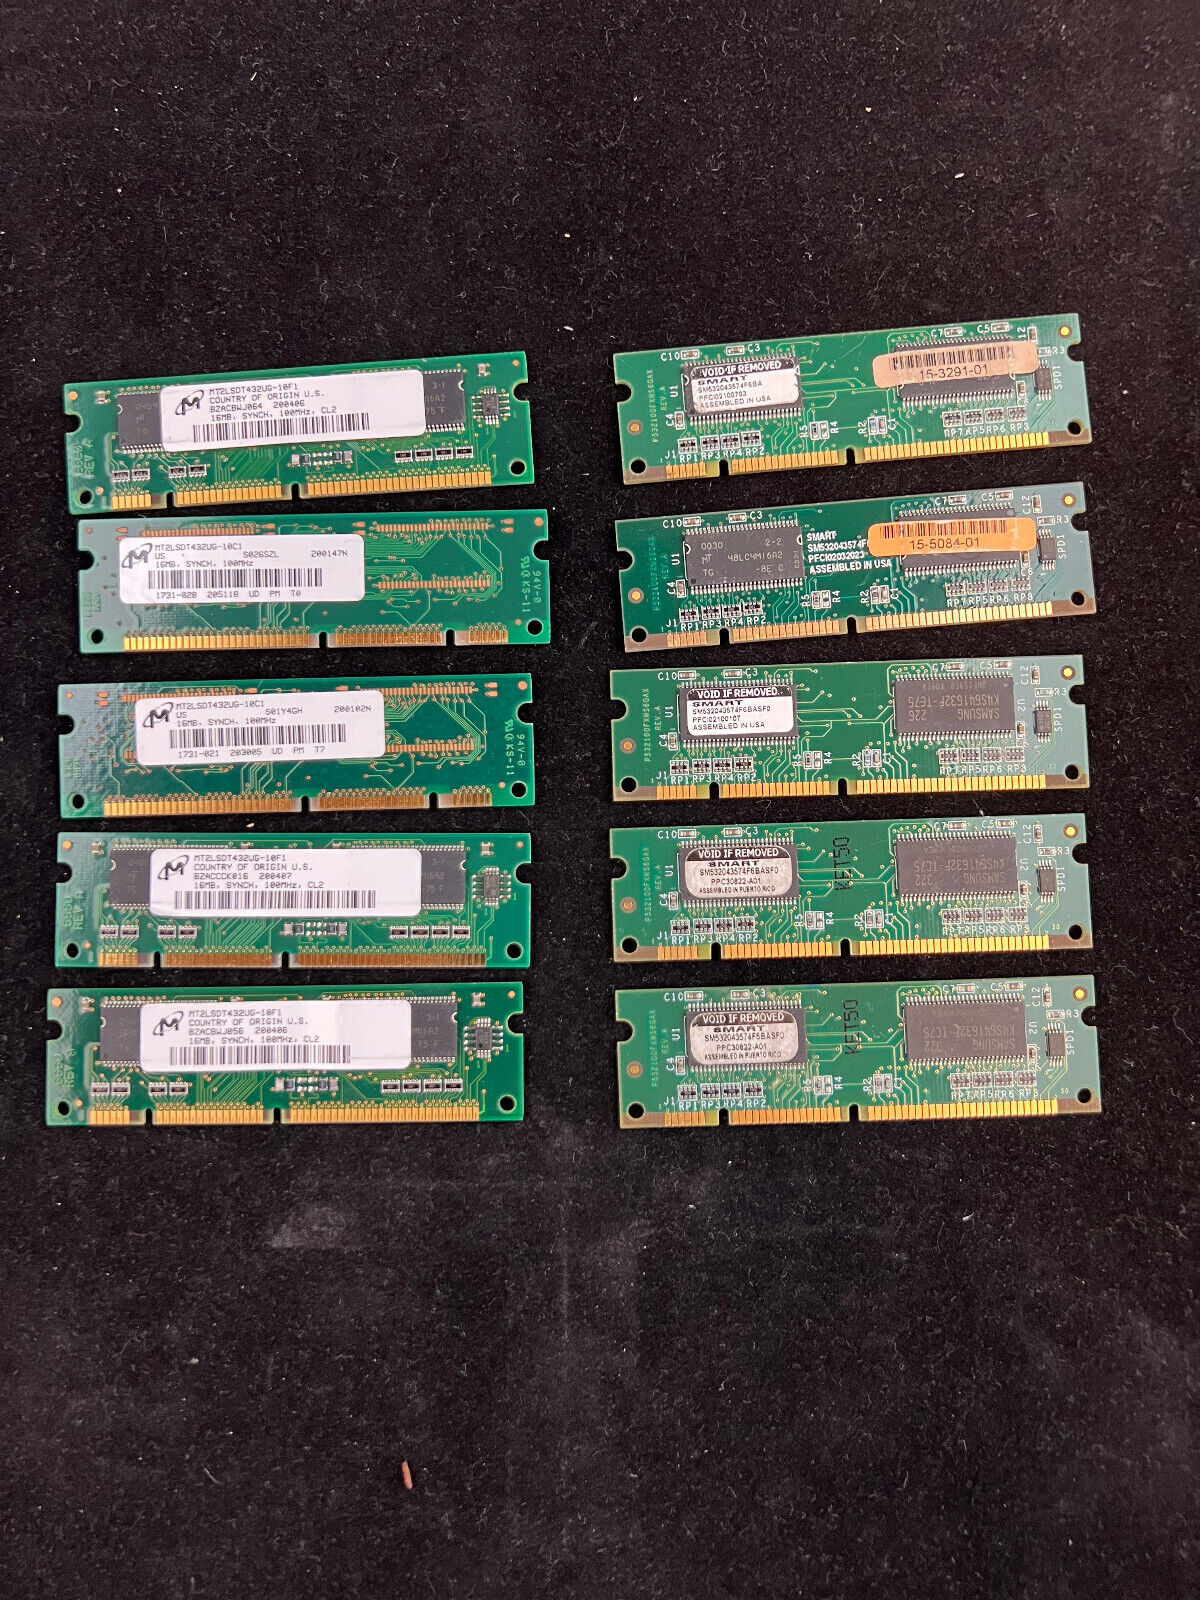 Lot of 10 MEM1700-16D MEM830-16D MEM800-16D 16MB DRAM for Cisco 1700/830/800 